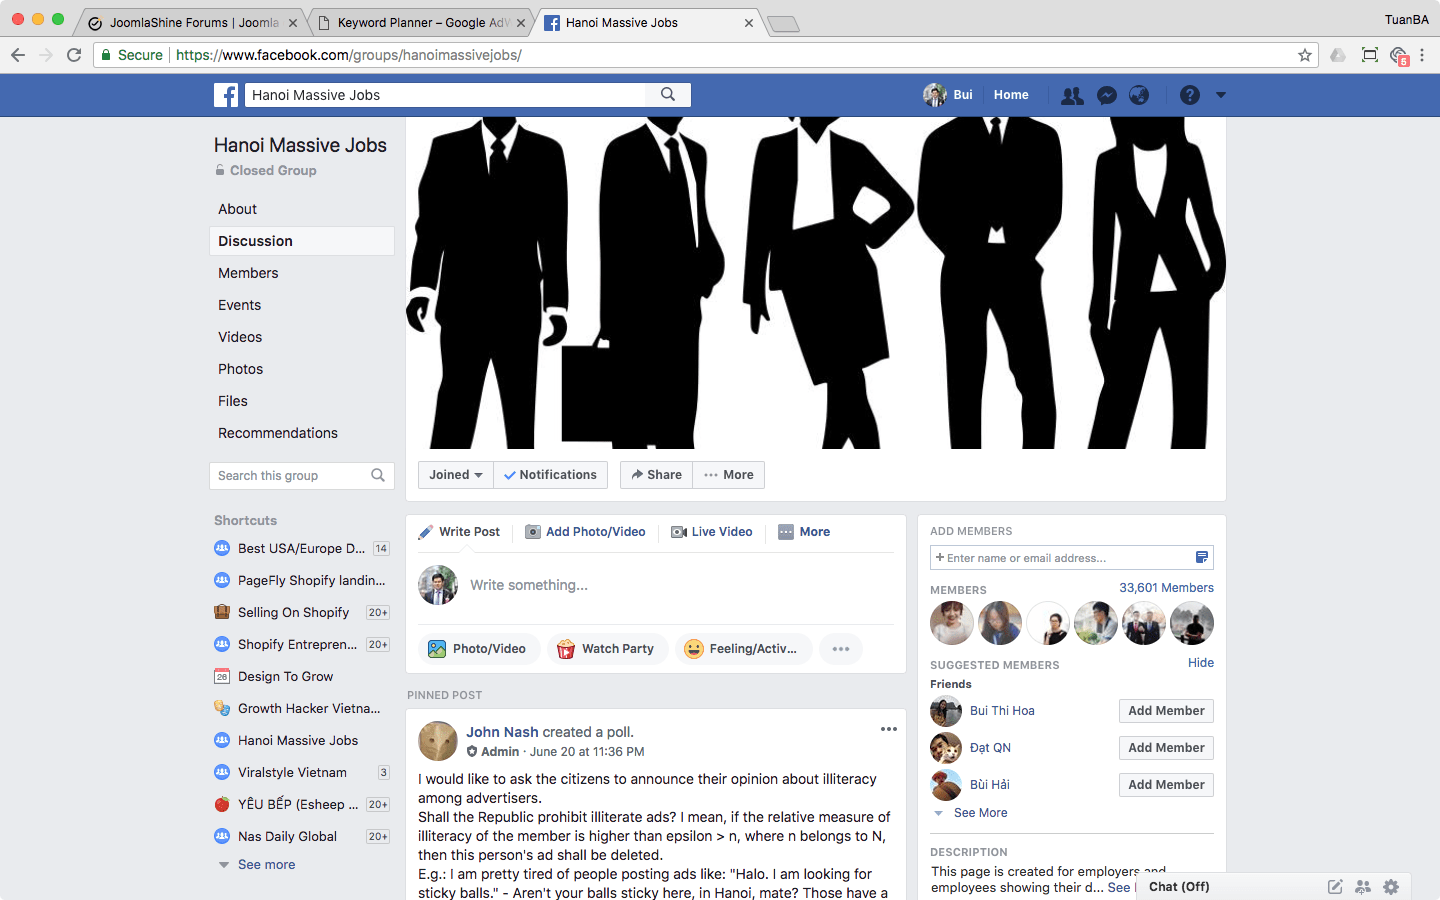 nhom facebook group hanoi massive jobs